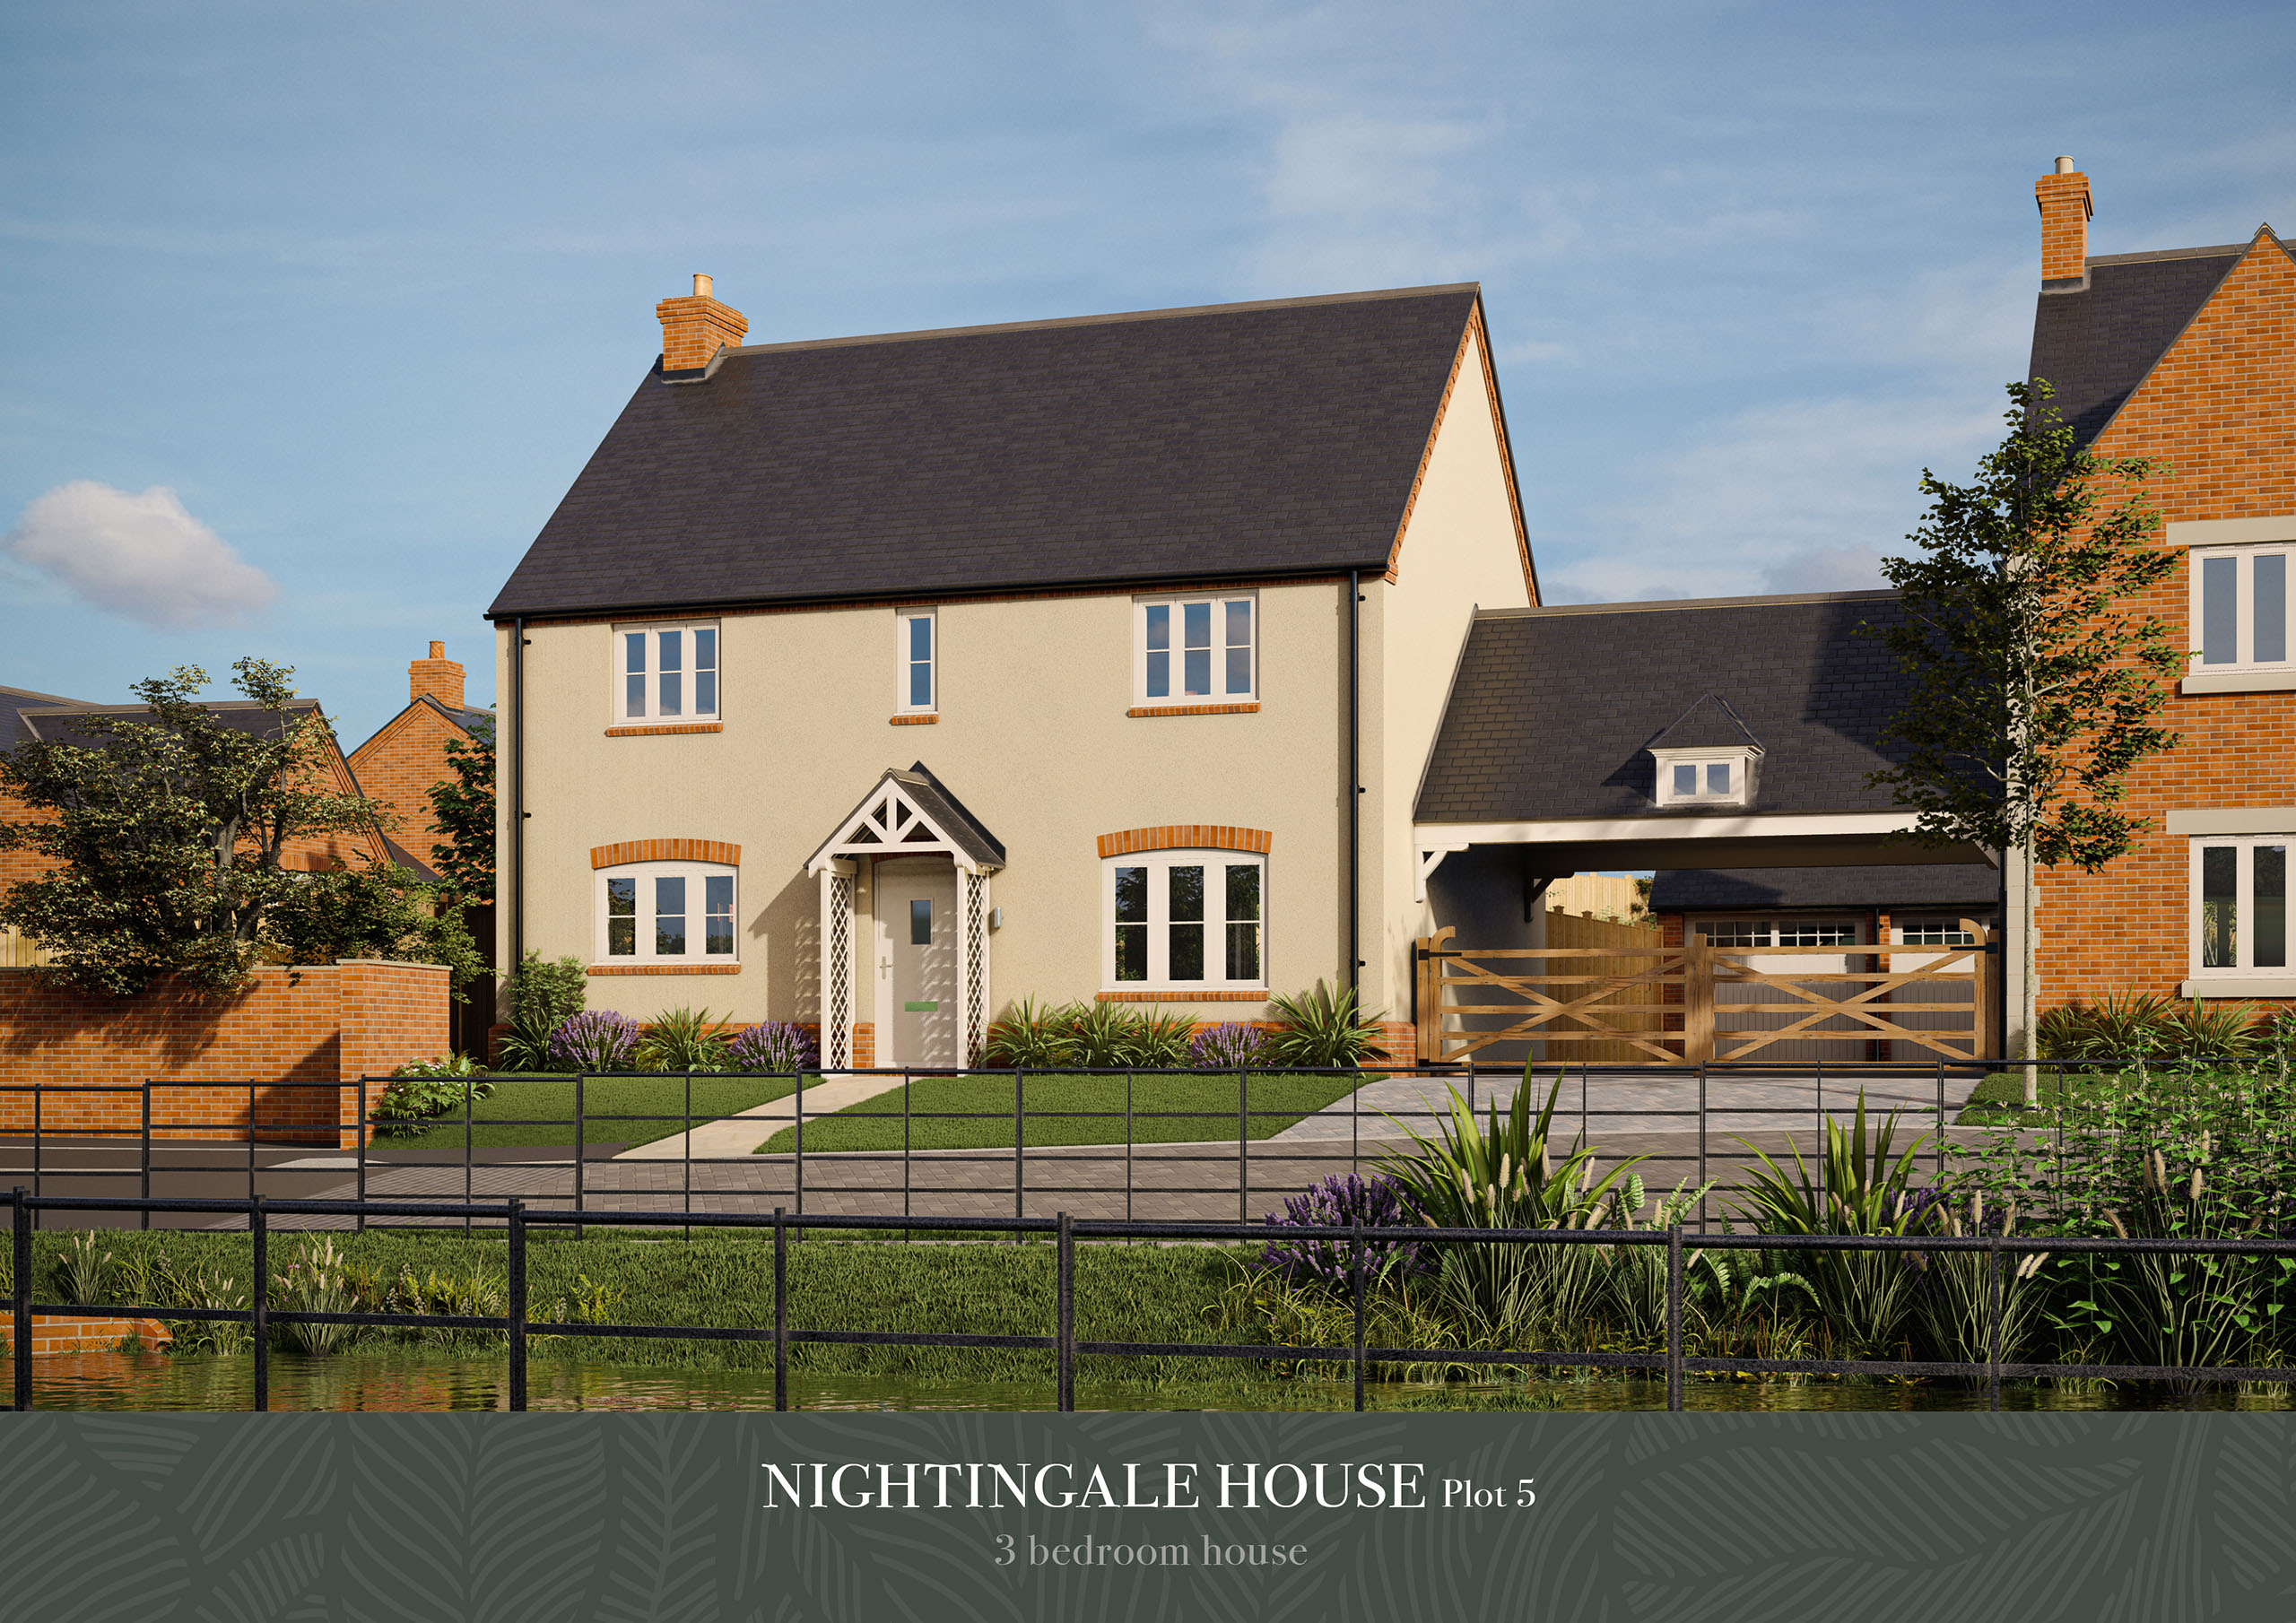 Nightingale house - Plot 5